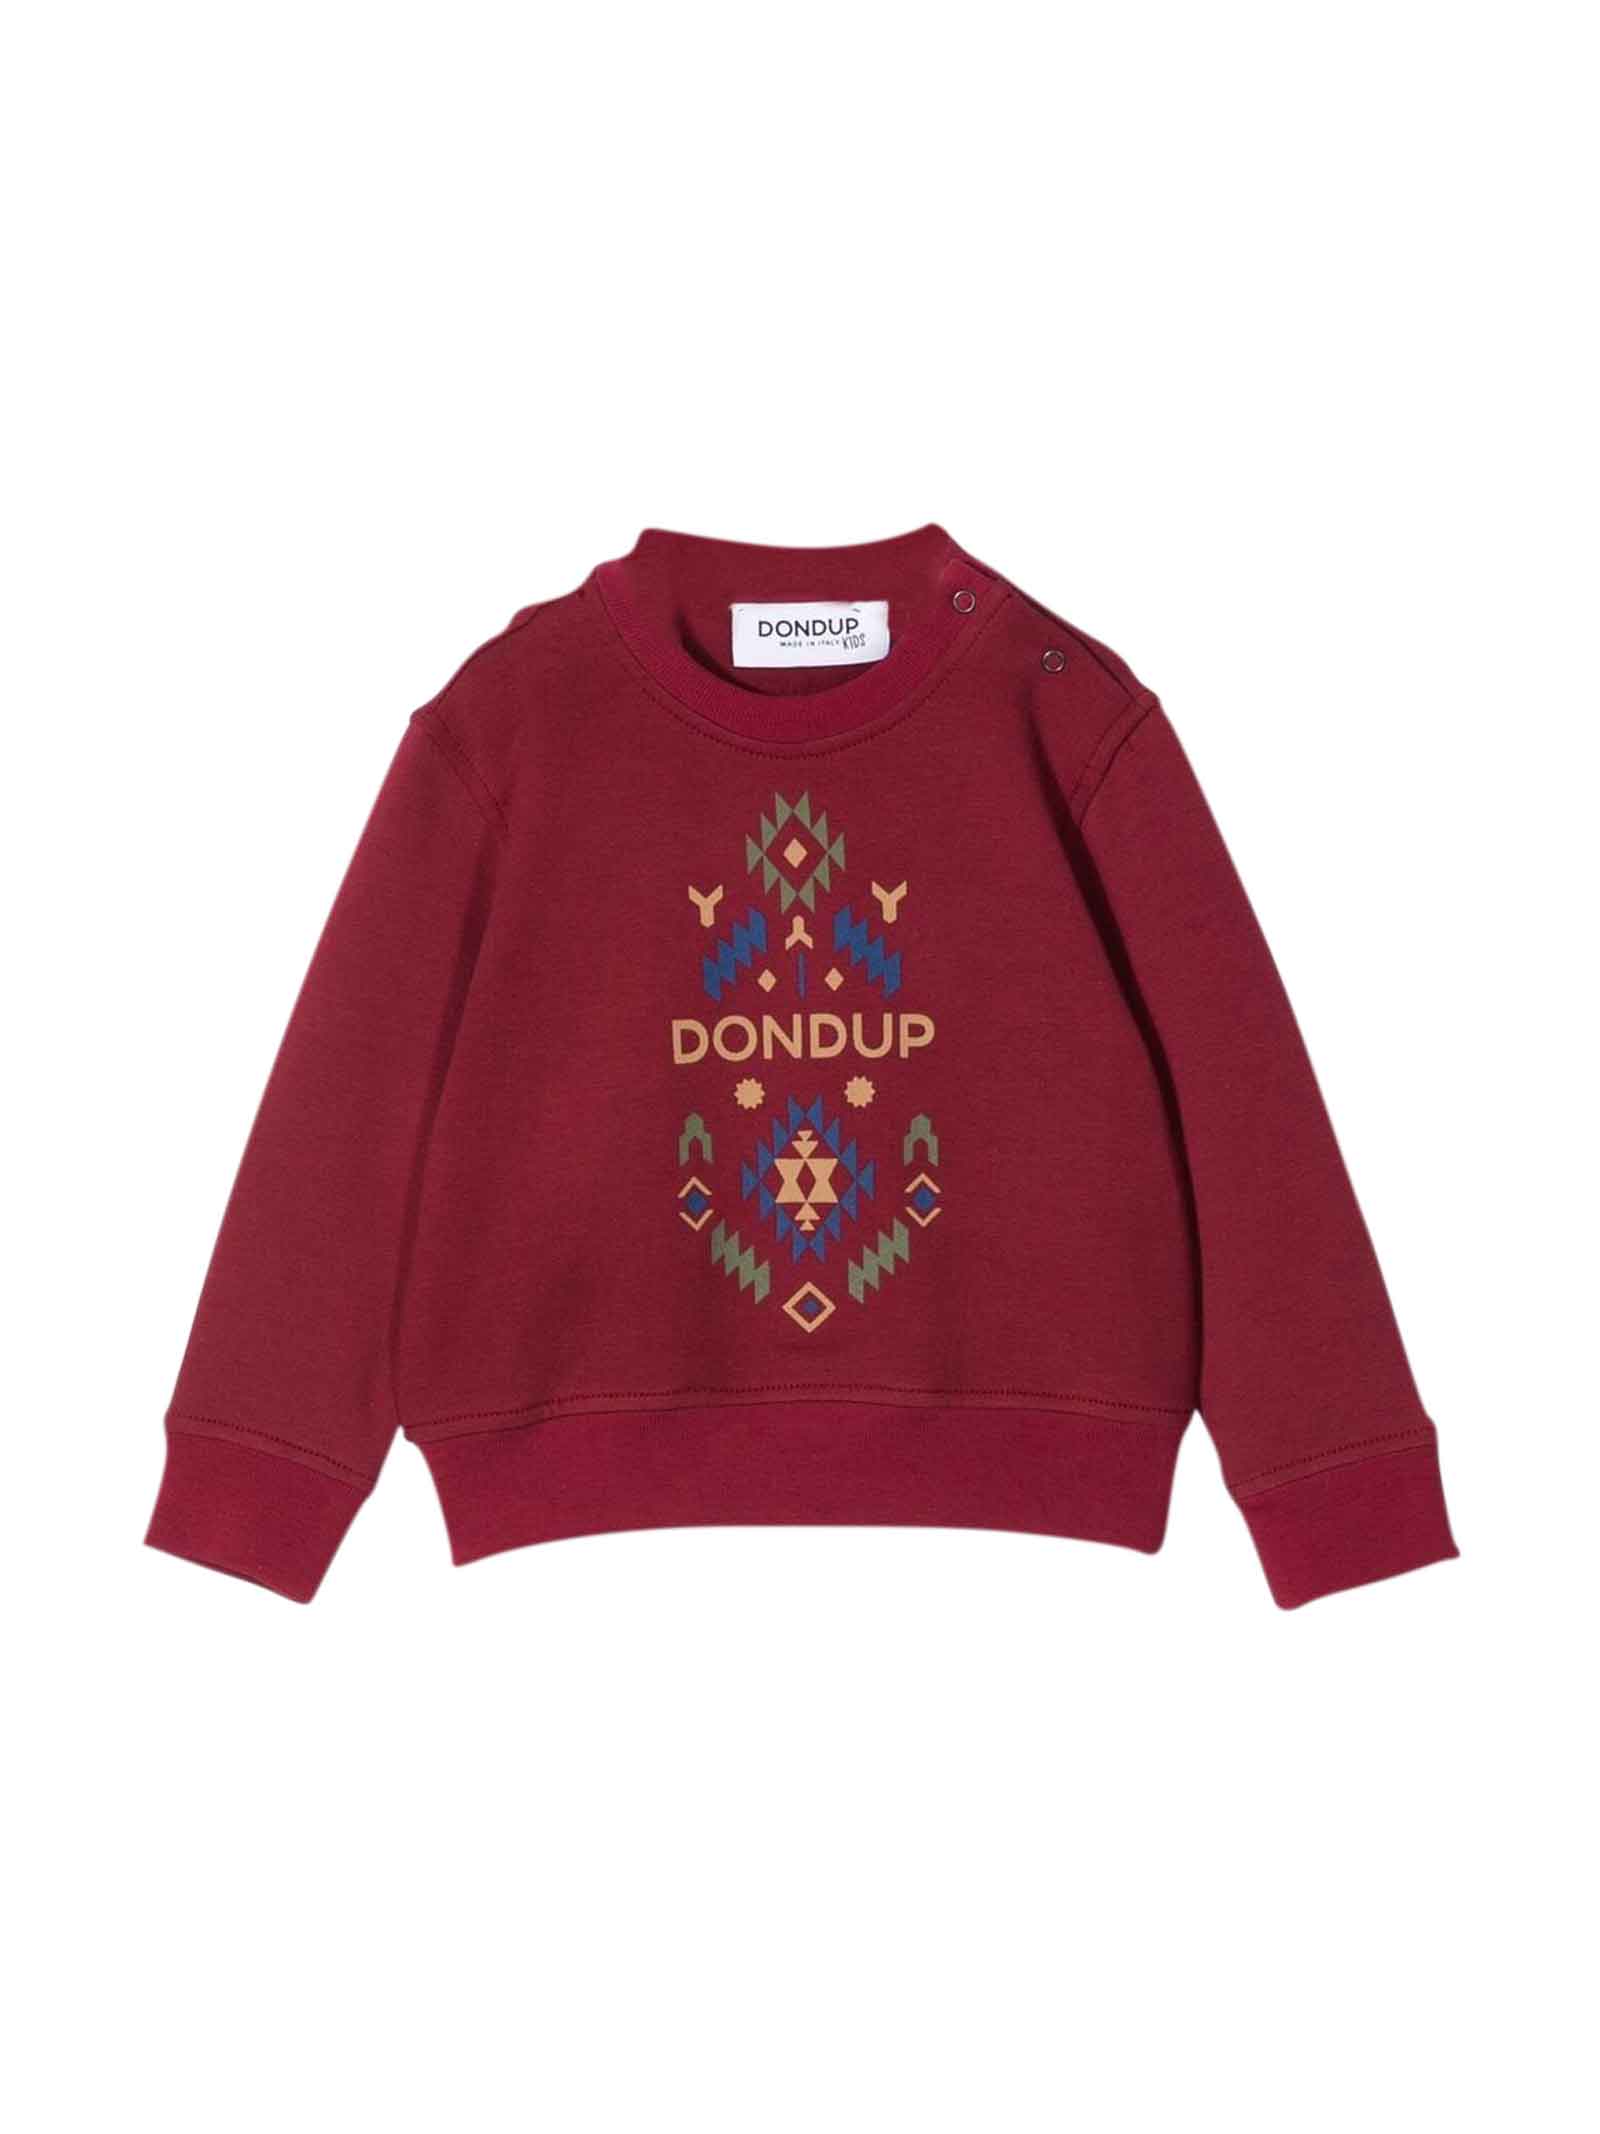 Dondup Burgundy Sweatshirt